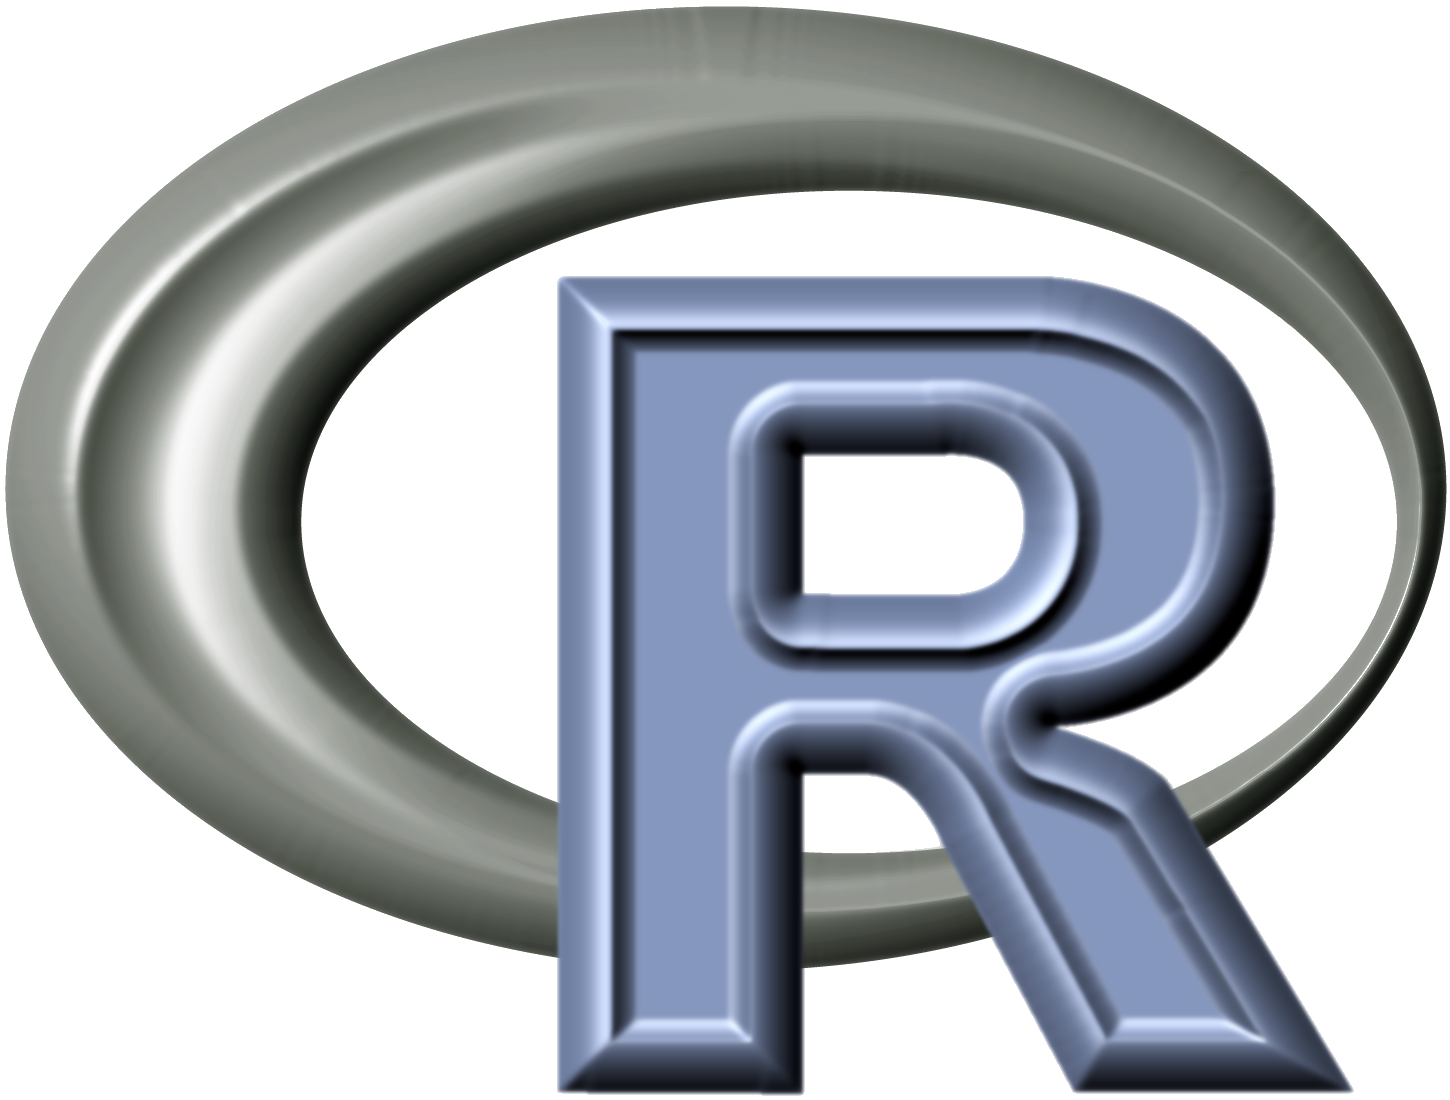 R object. R Programming language. Логотип r. Лого (язык программирования). R язык программирования логотип.